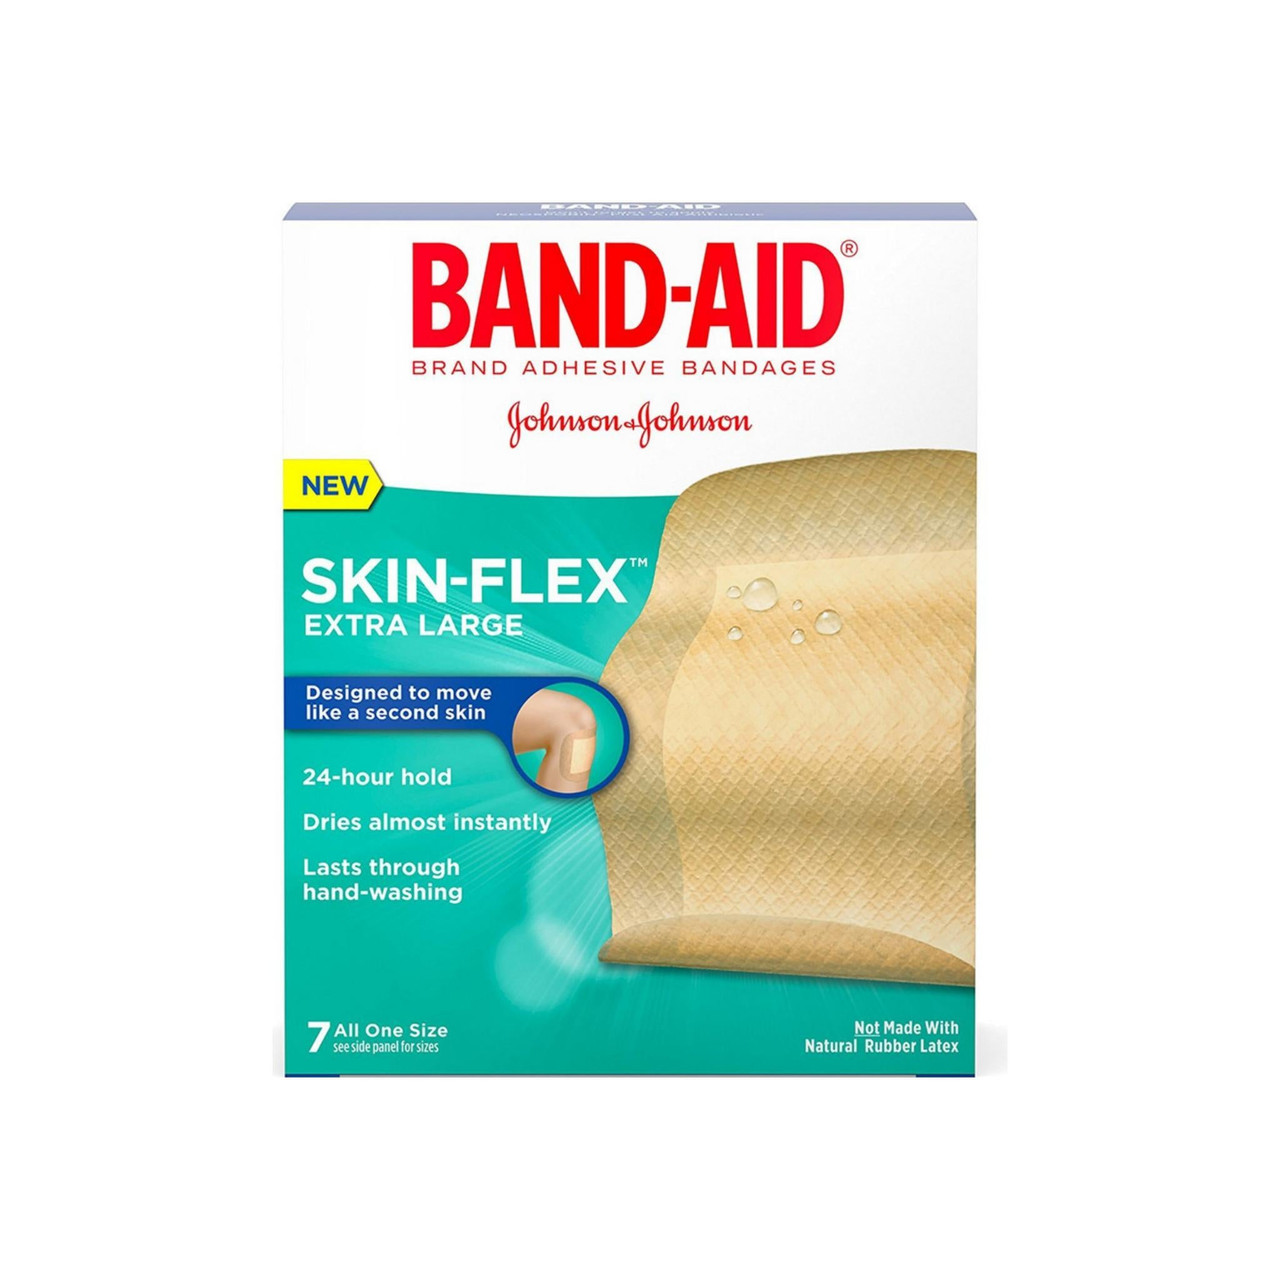 Band-Aid Skin-Flex Brand Adhesive Bandages Value Pack 60 Assorted Sizes -  60 ea